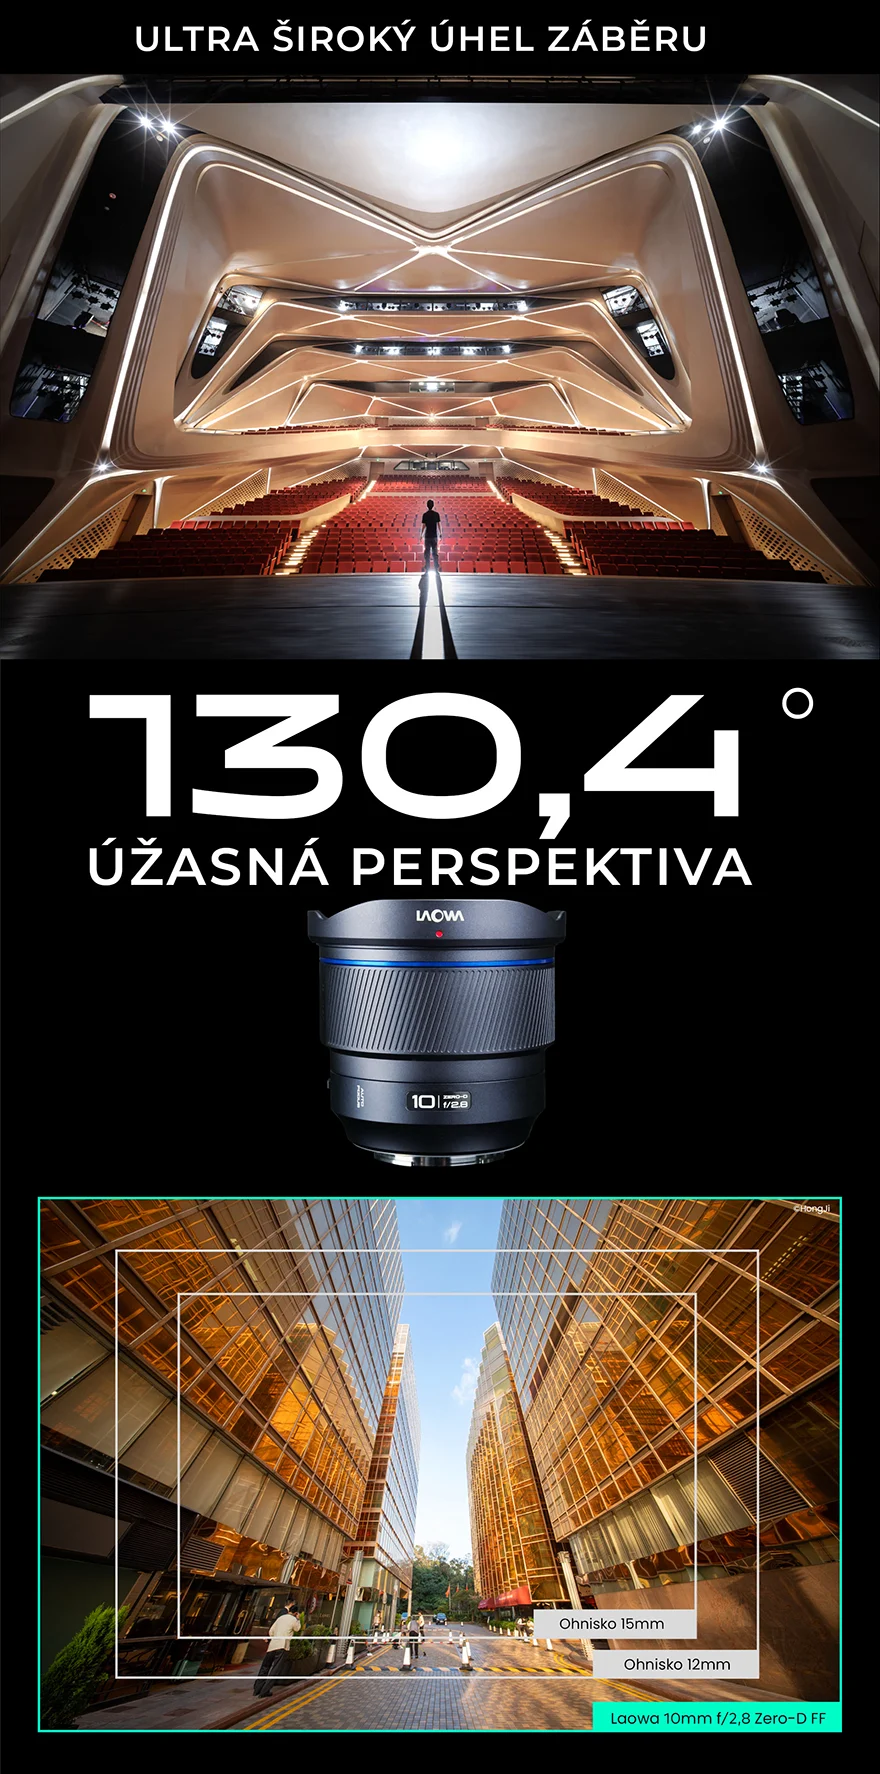 Laowa 10mm f/2.8 Zero-D FF